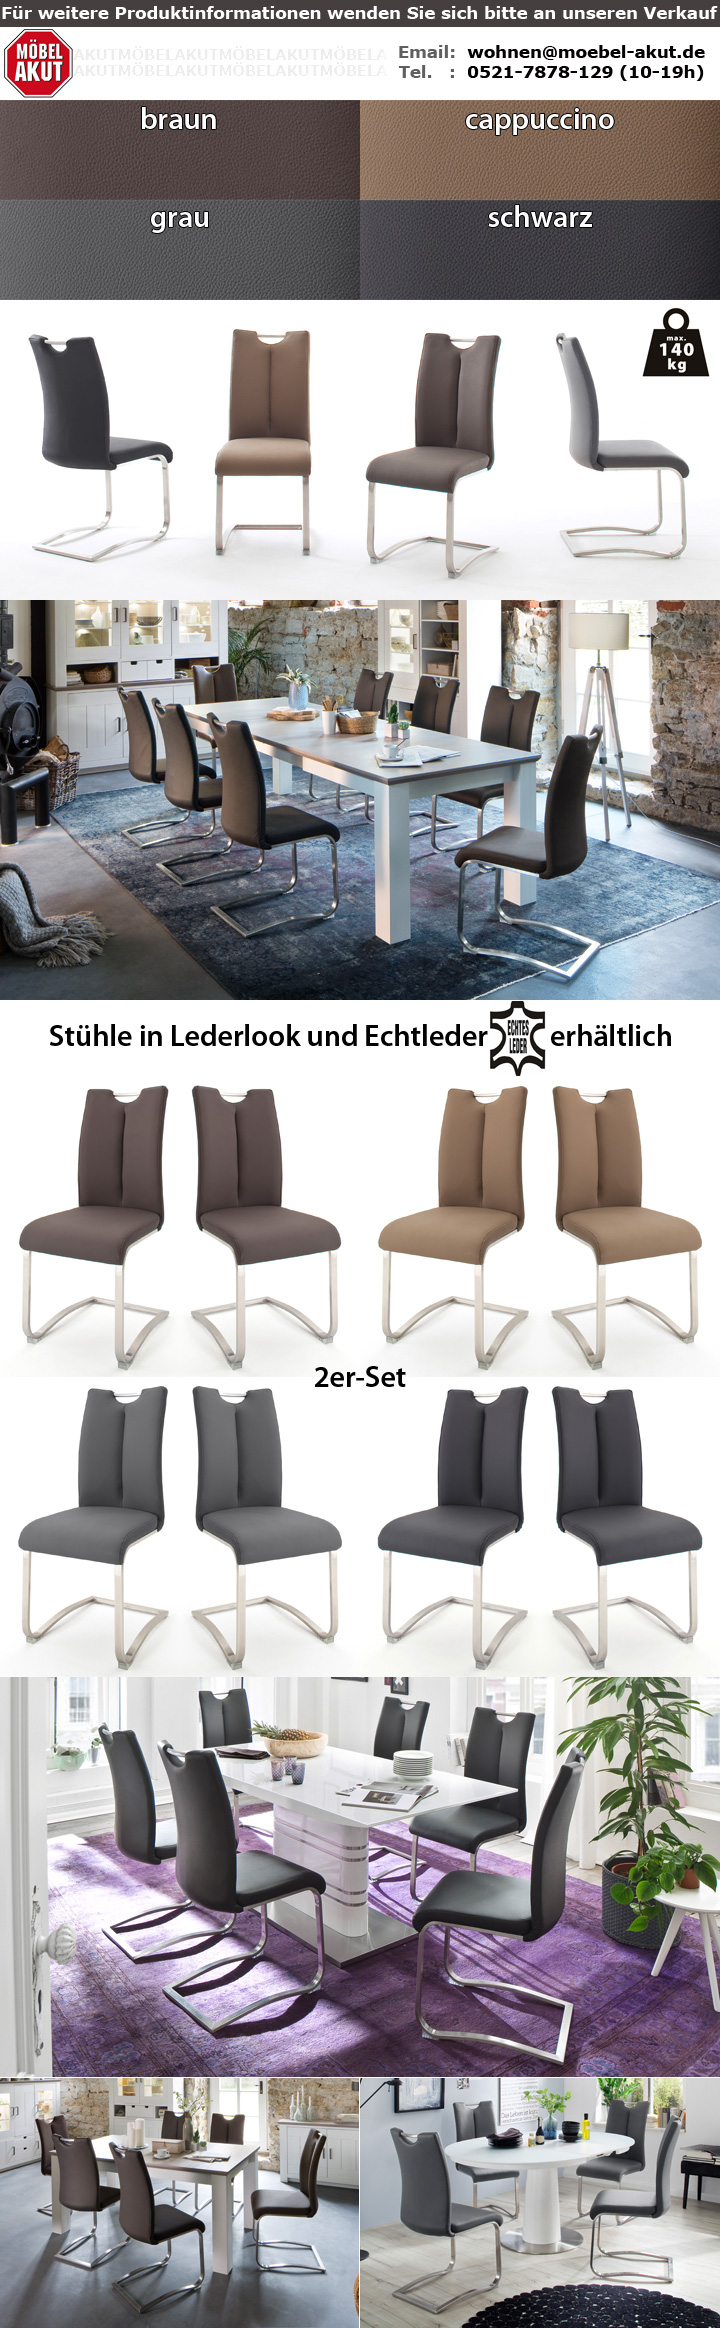 Schwingstuhl ARTOS 2 2er-Set Stuhl Freischwinger in Echtleder grau